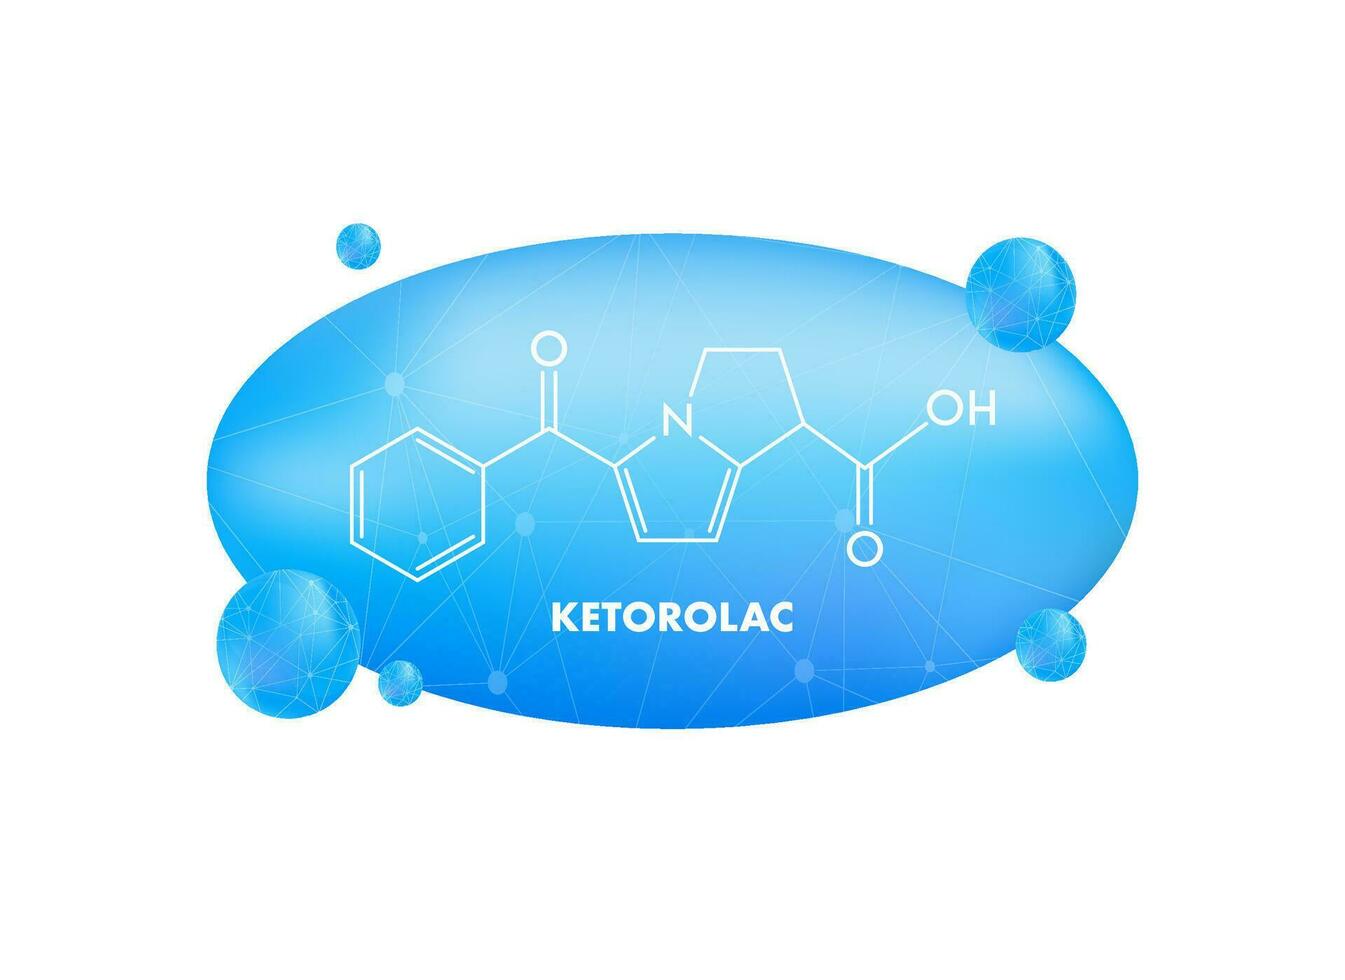 Ketorolac concept chemical formula icon label, text font vector illustration.